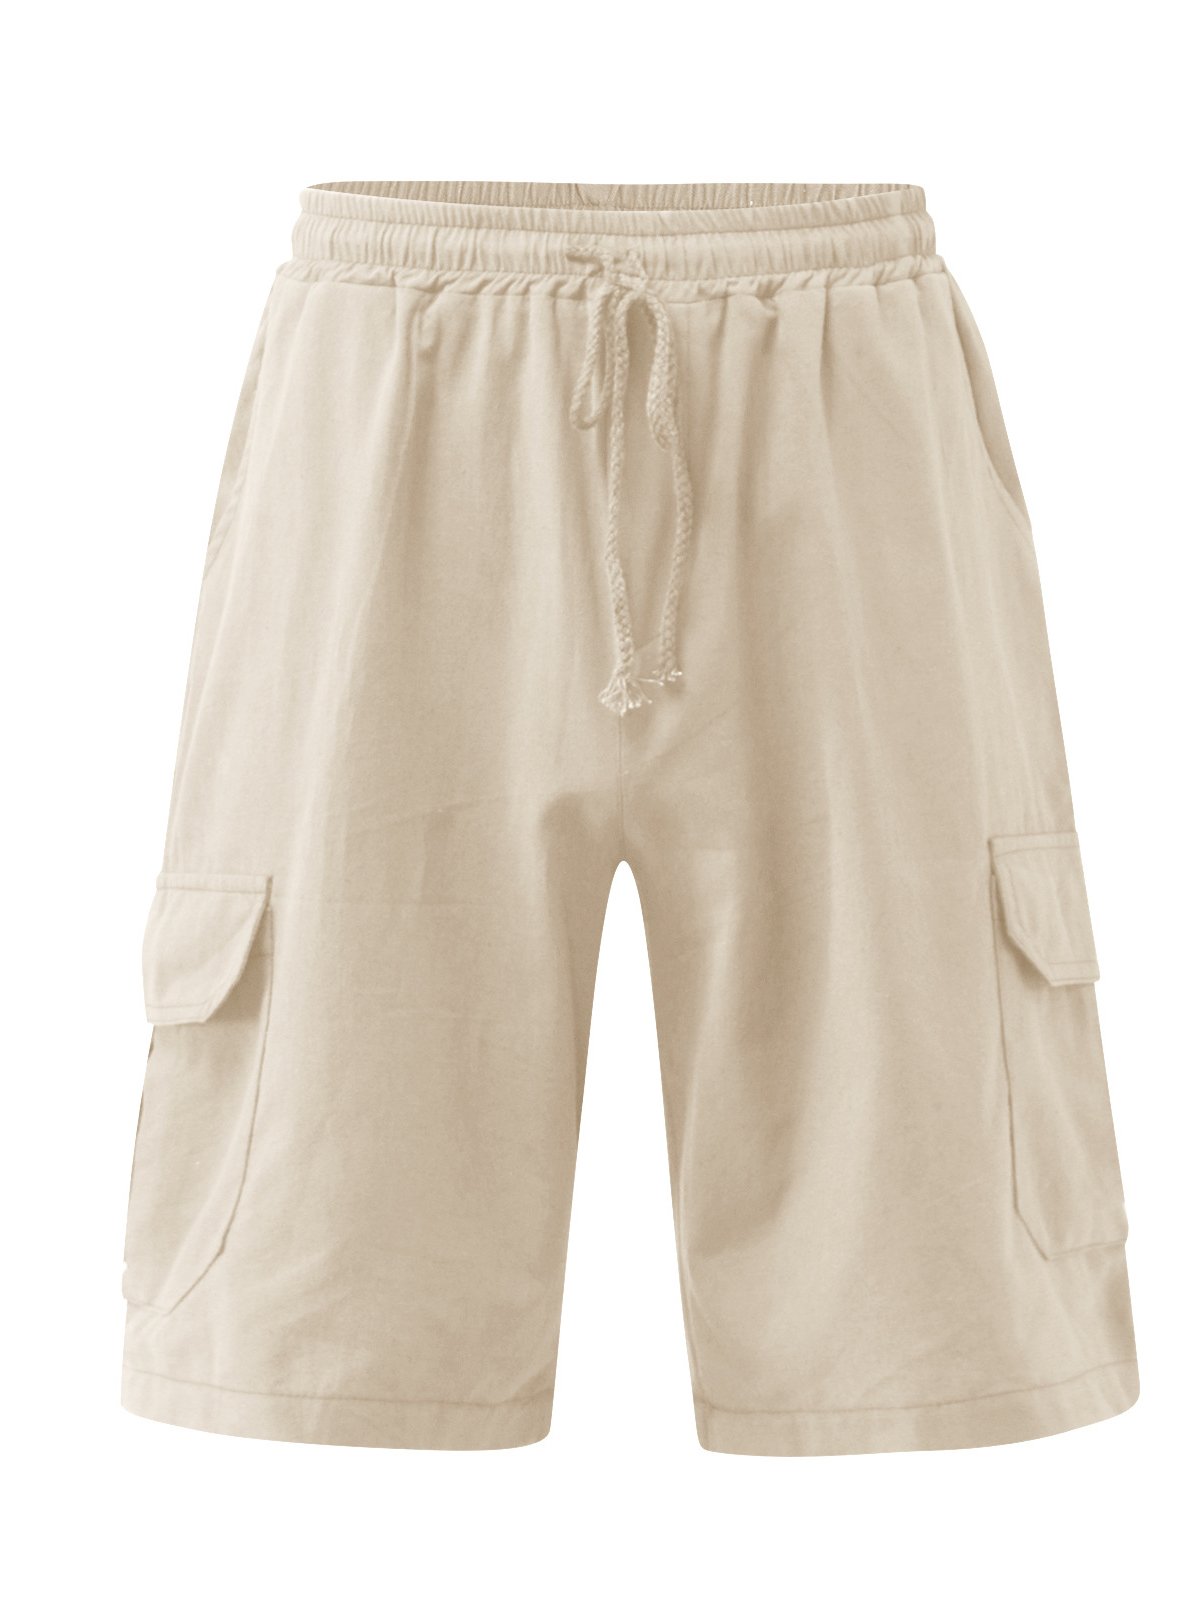 Hardaddy Men's Linen Shorts Multi-Pocket Tie Cargo Pants